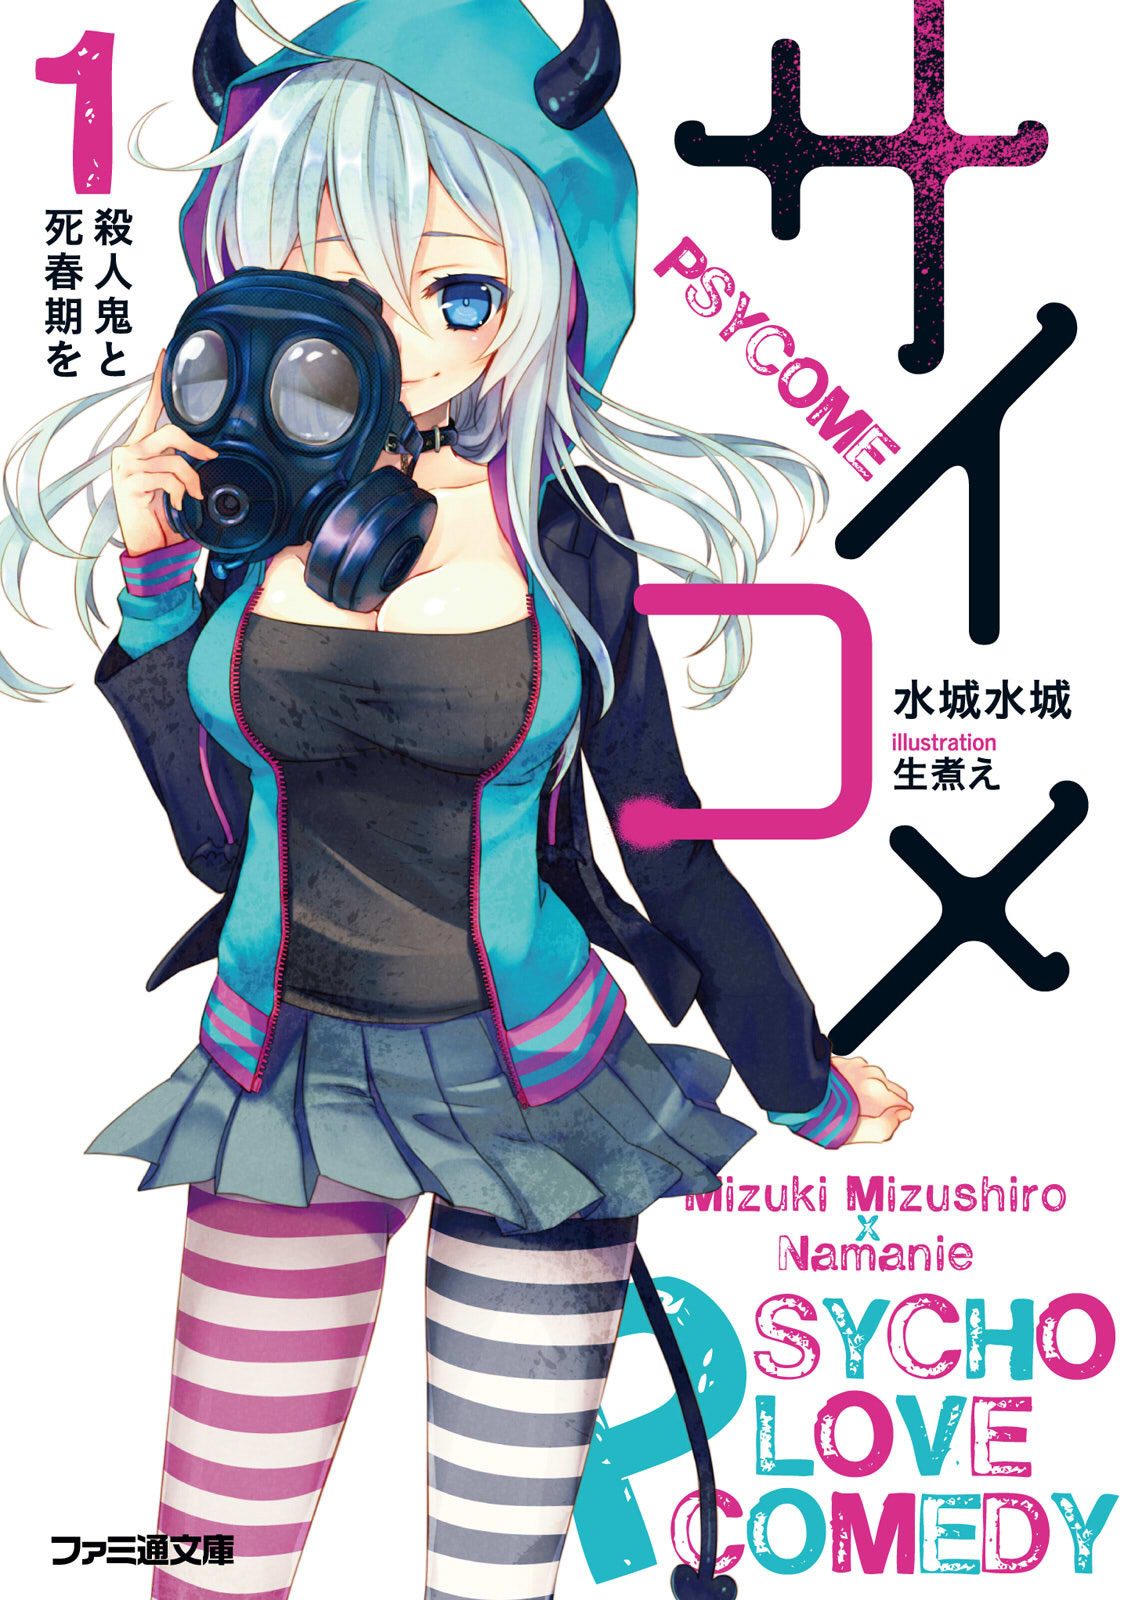 Psycho Busters – English Light Novels